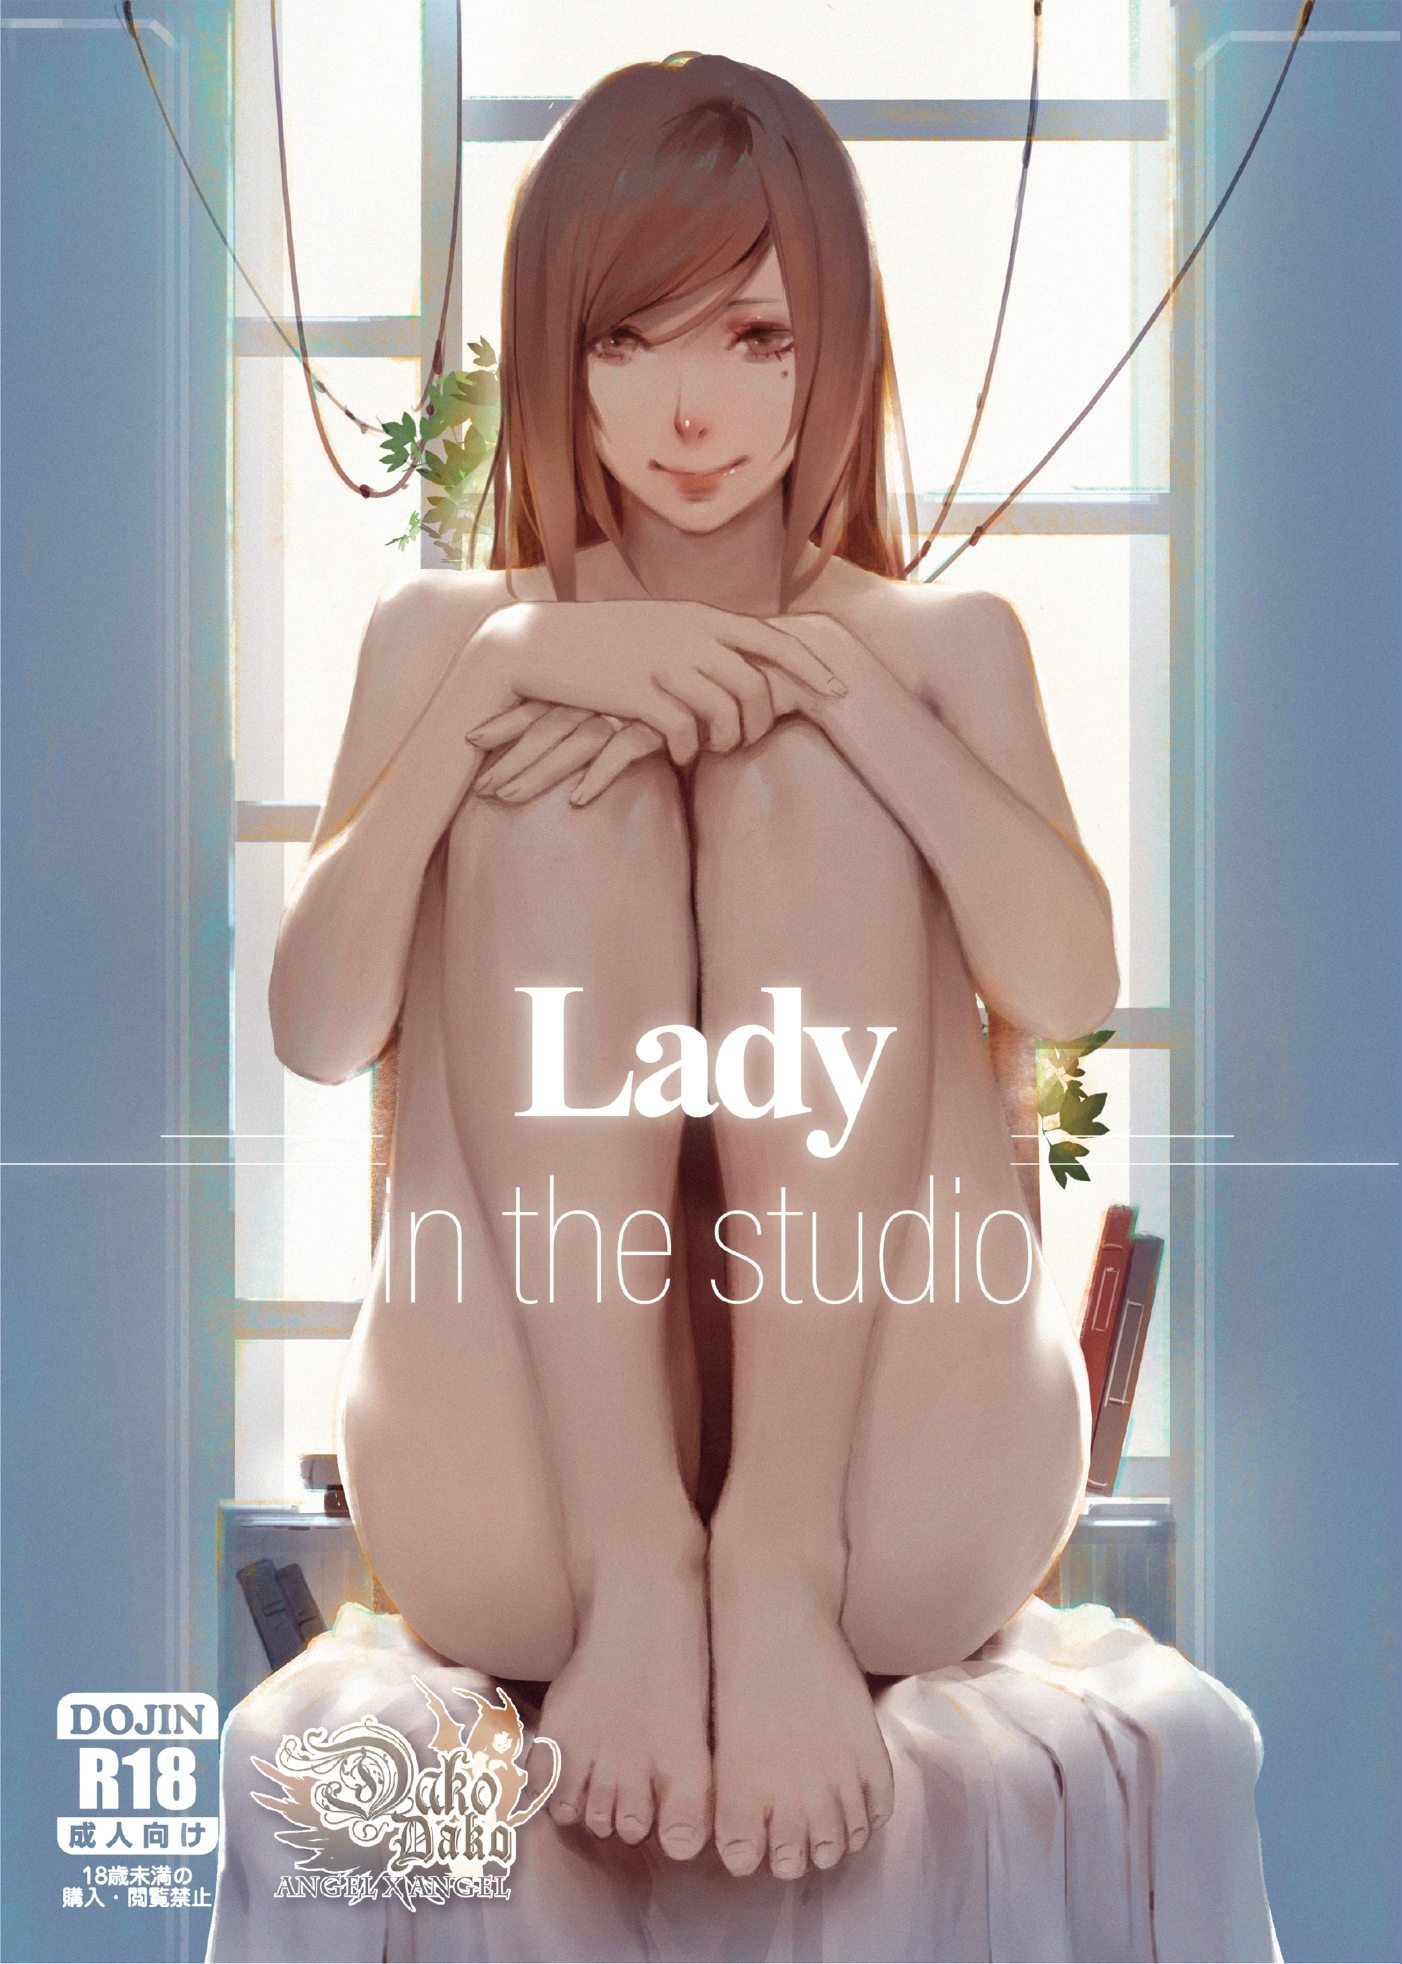 Lady In the Studio by DAKO